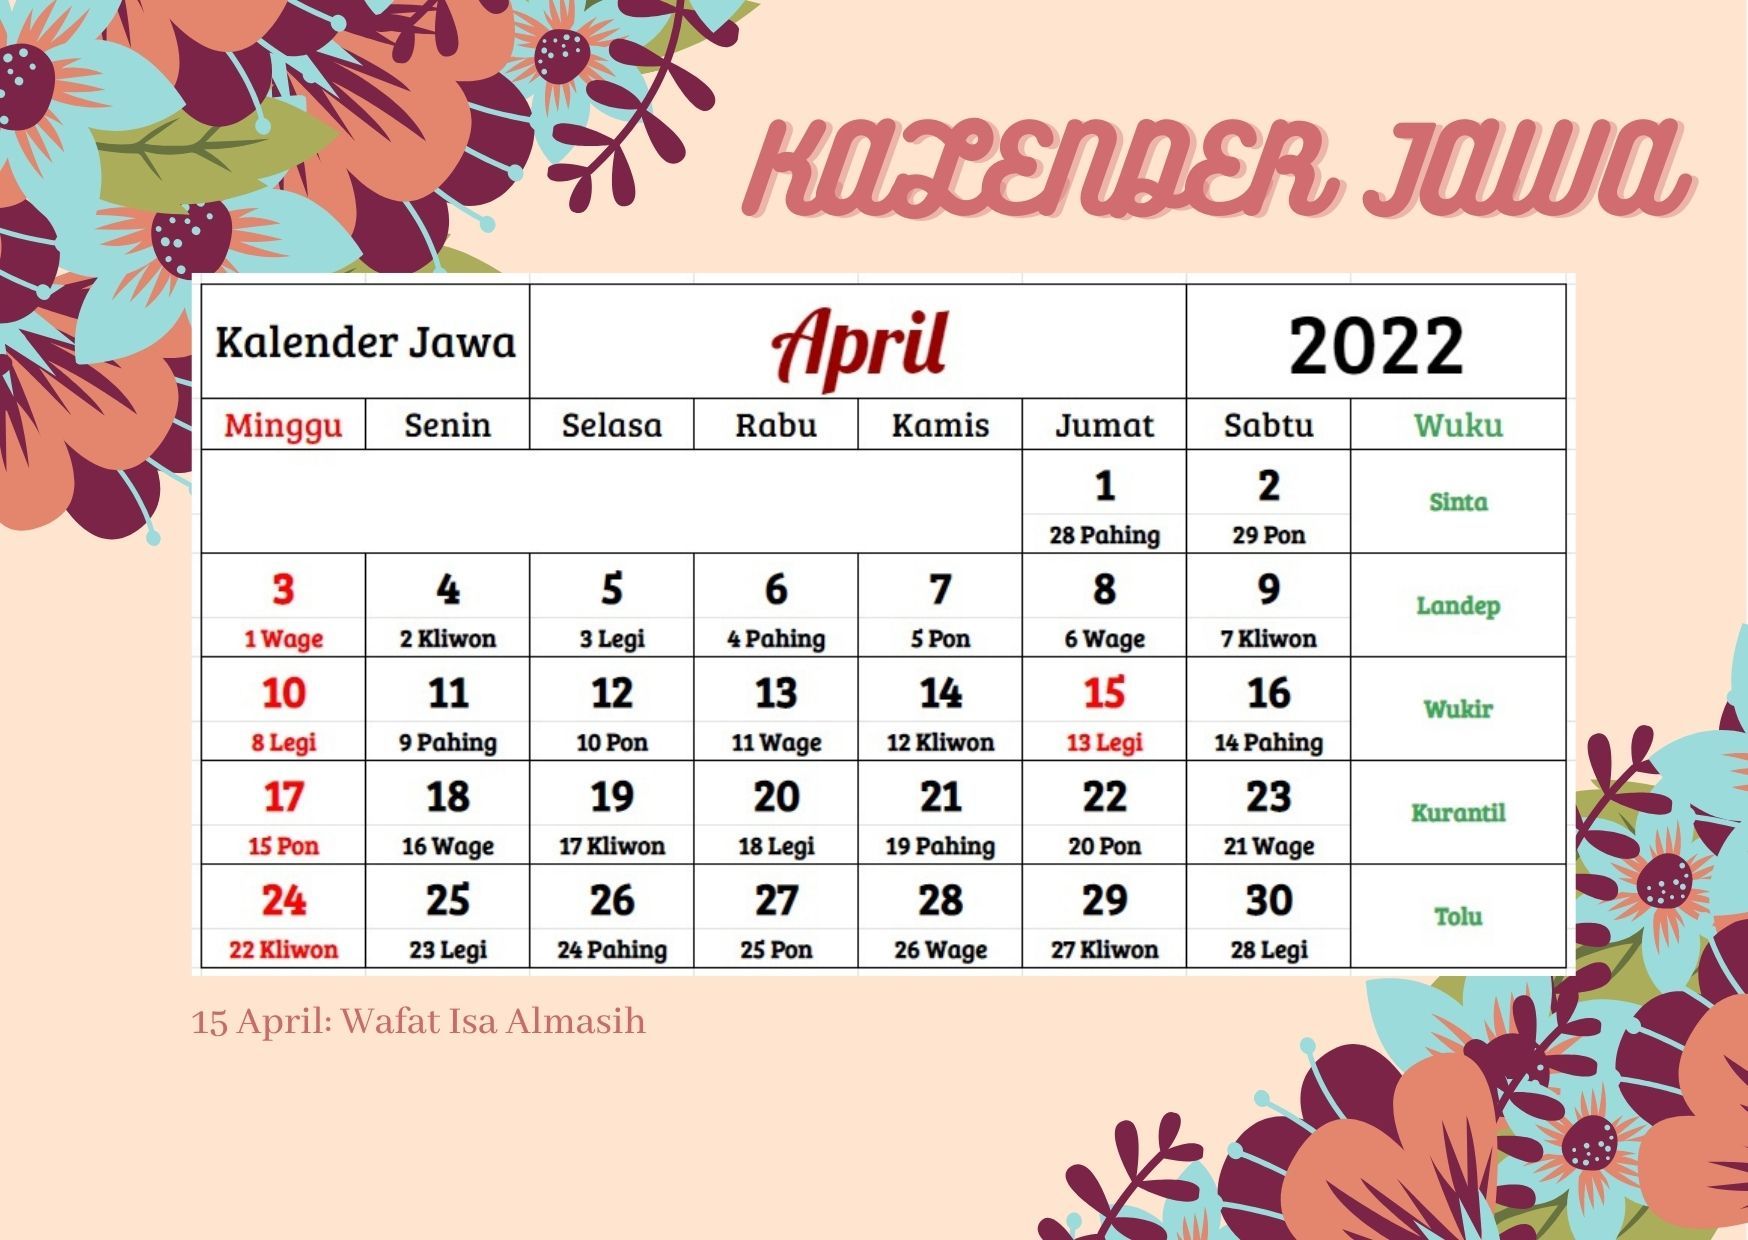 Kalender maret 2022 lengkap